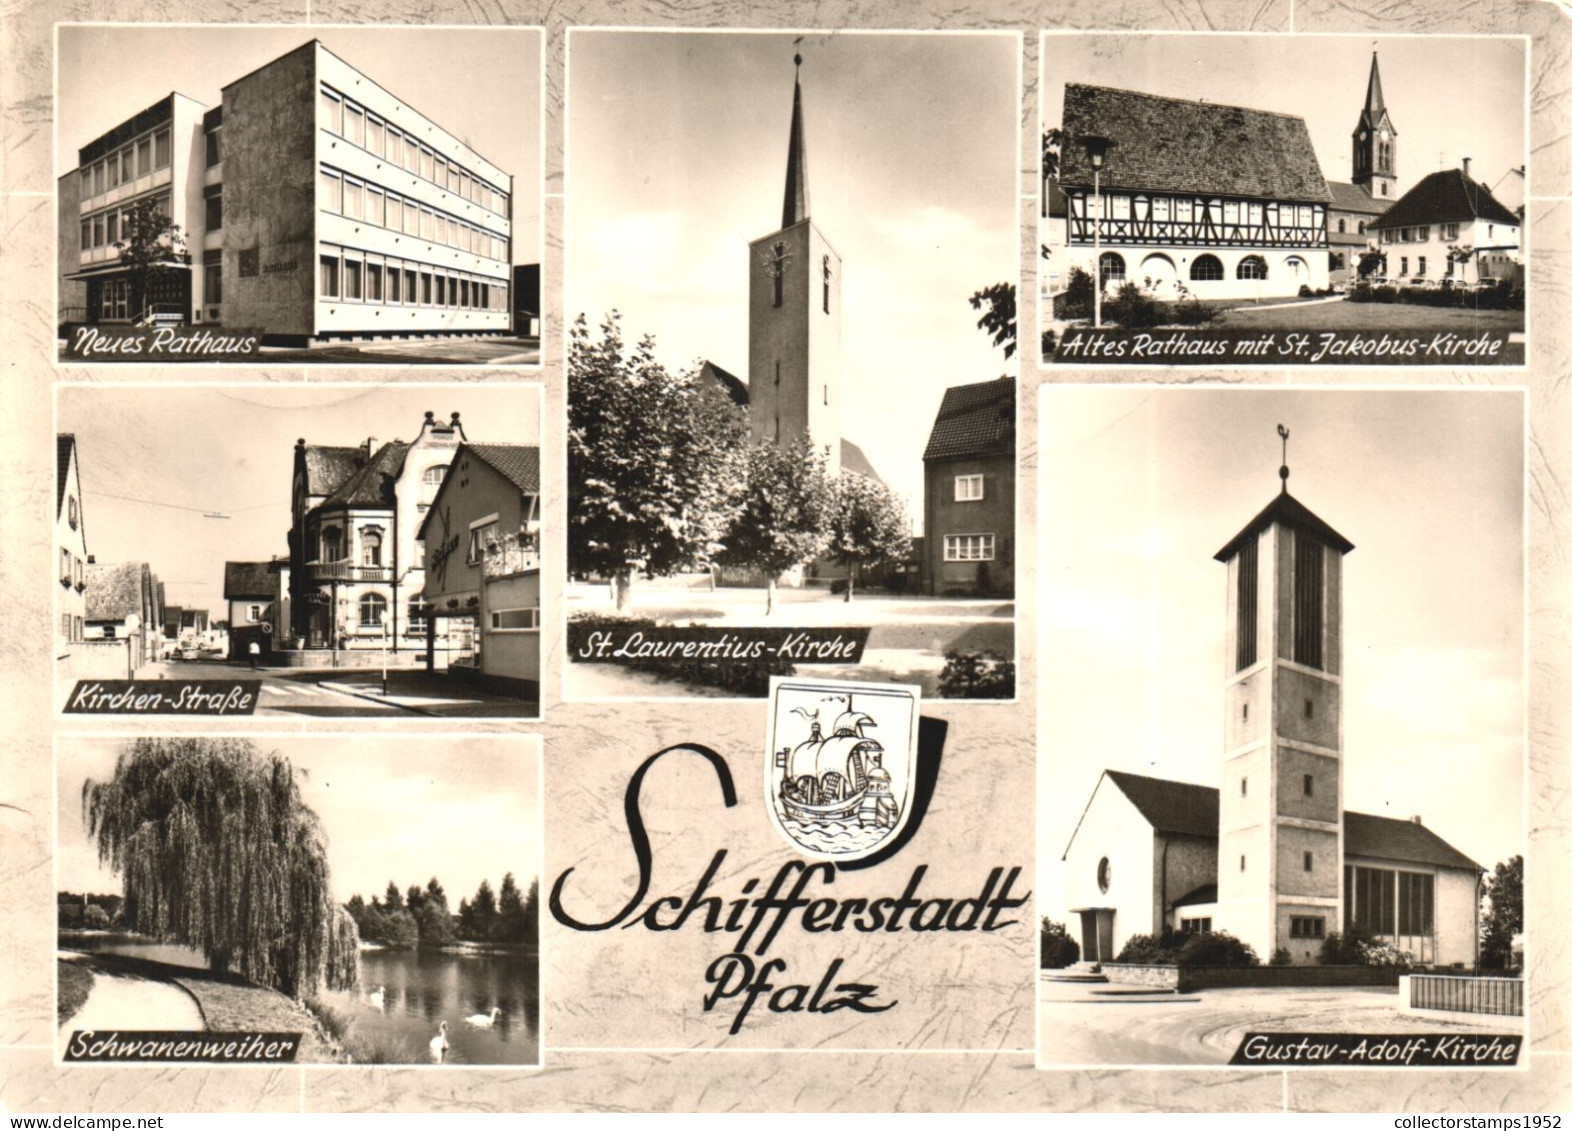 SCHIFFERSTADT, MULTIPLE VIEWS, ARCHITECTURE, LAKE, SWAN, CHURCH, TOWER WITH CLOCK, EMBLEM, GERMANY - Schifferstadt